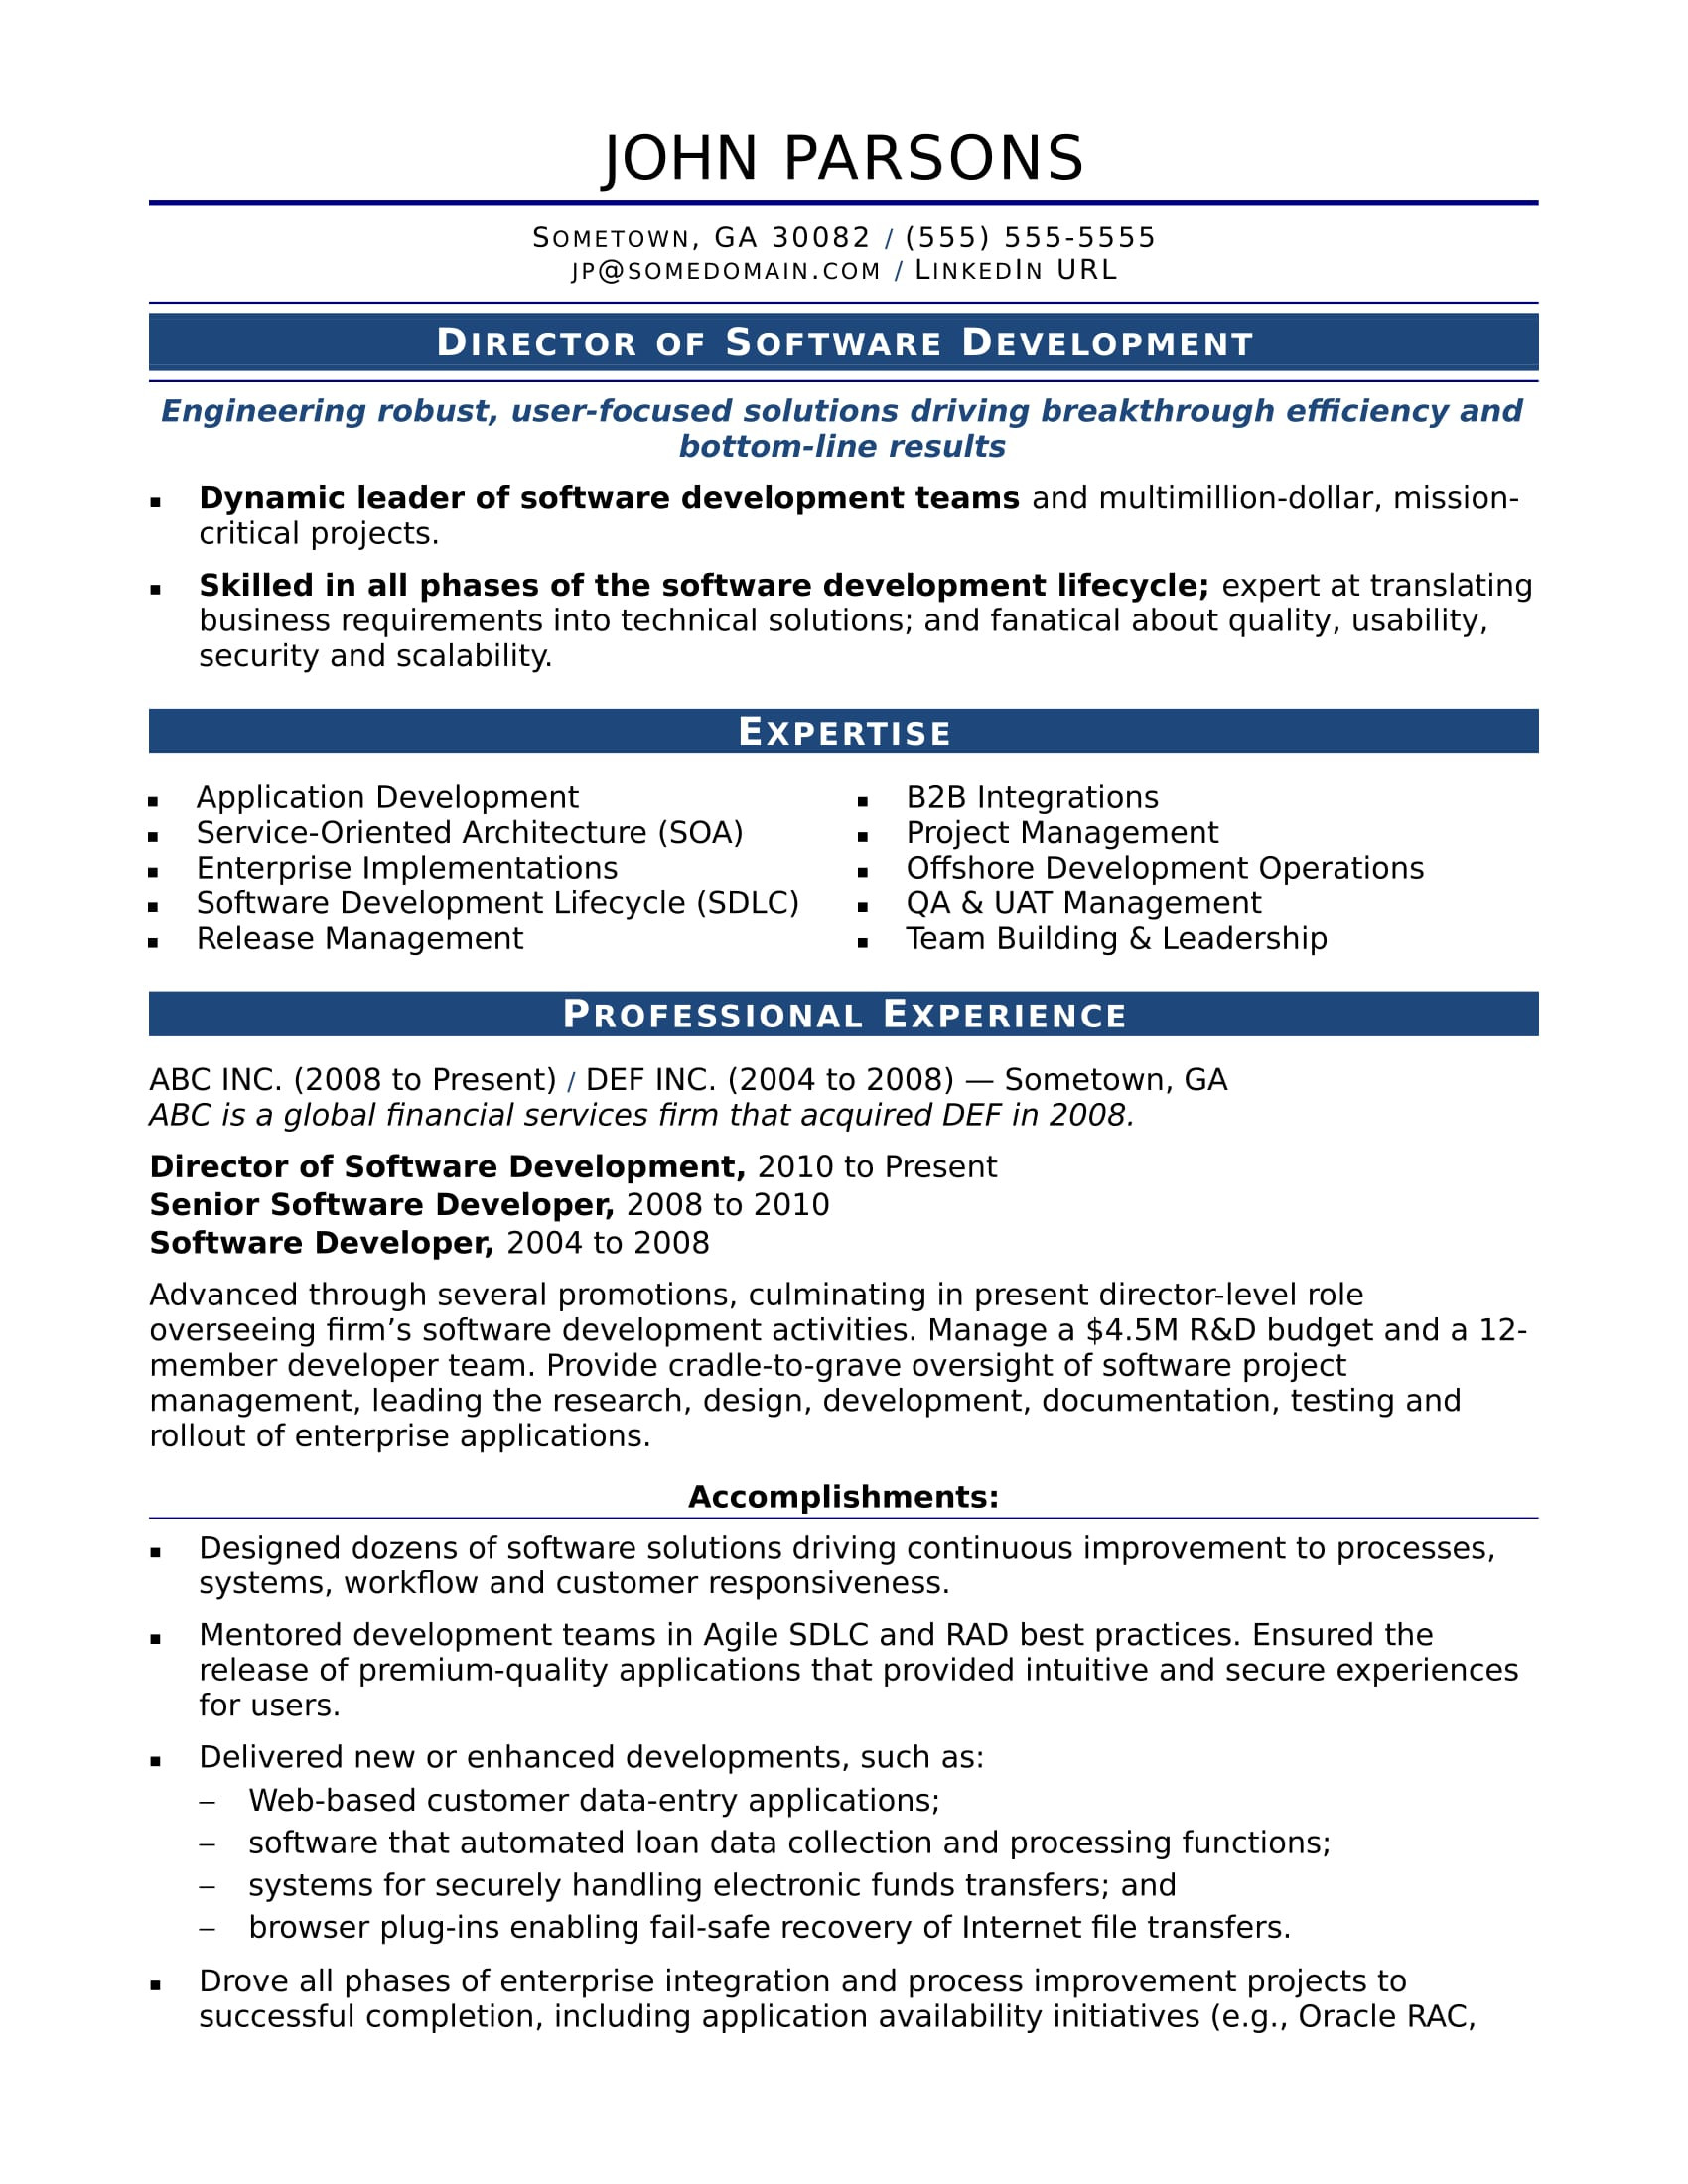 Job Application Work Experience Resume Sample Sample Resume for An Experienced It Developer Monster.com